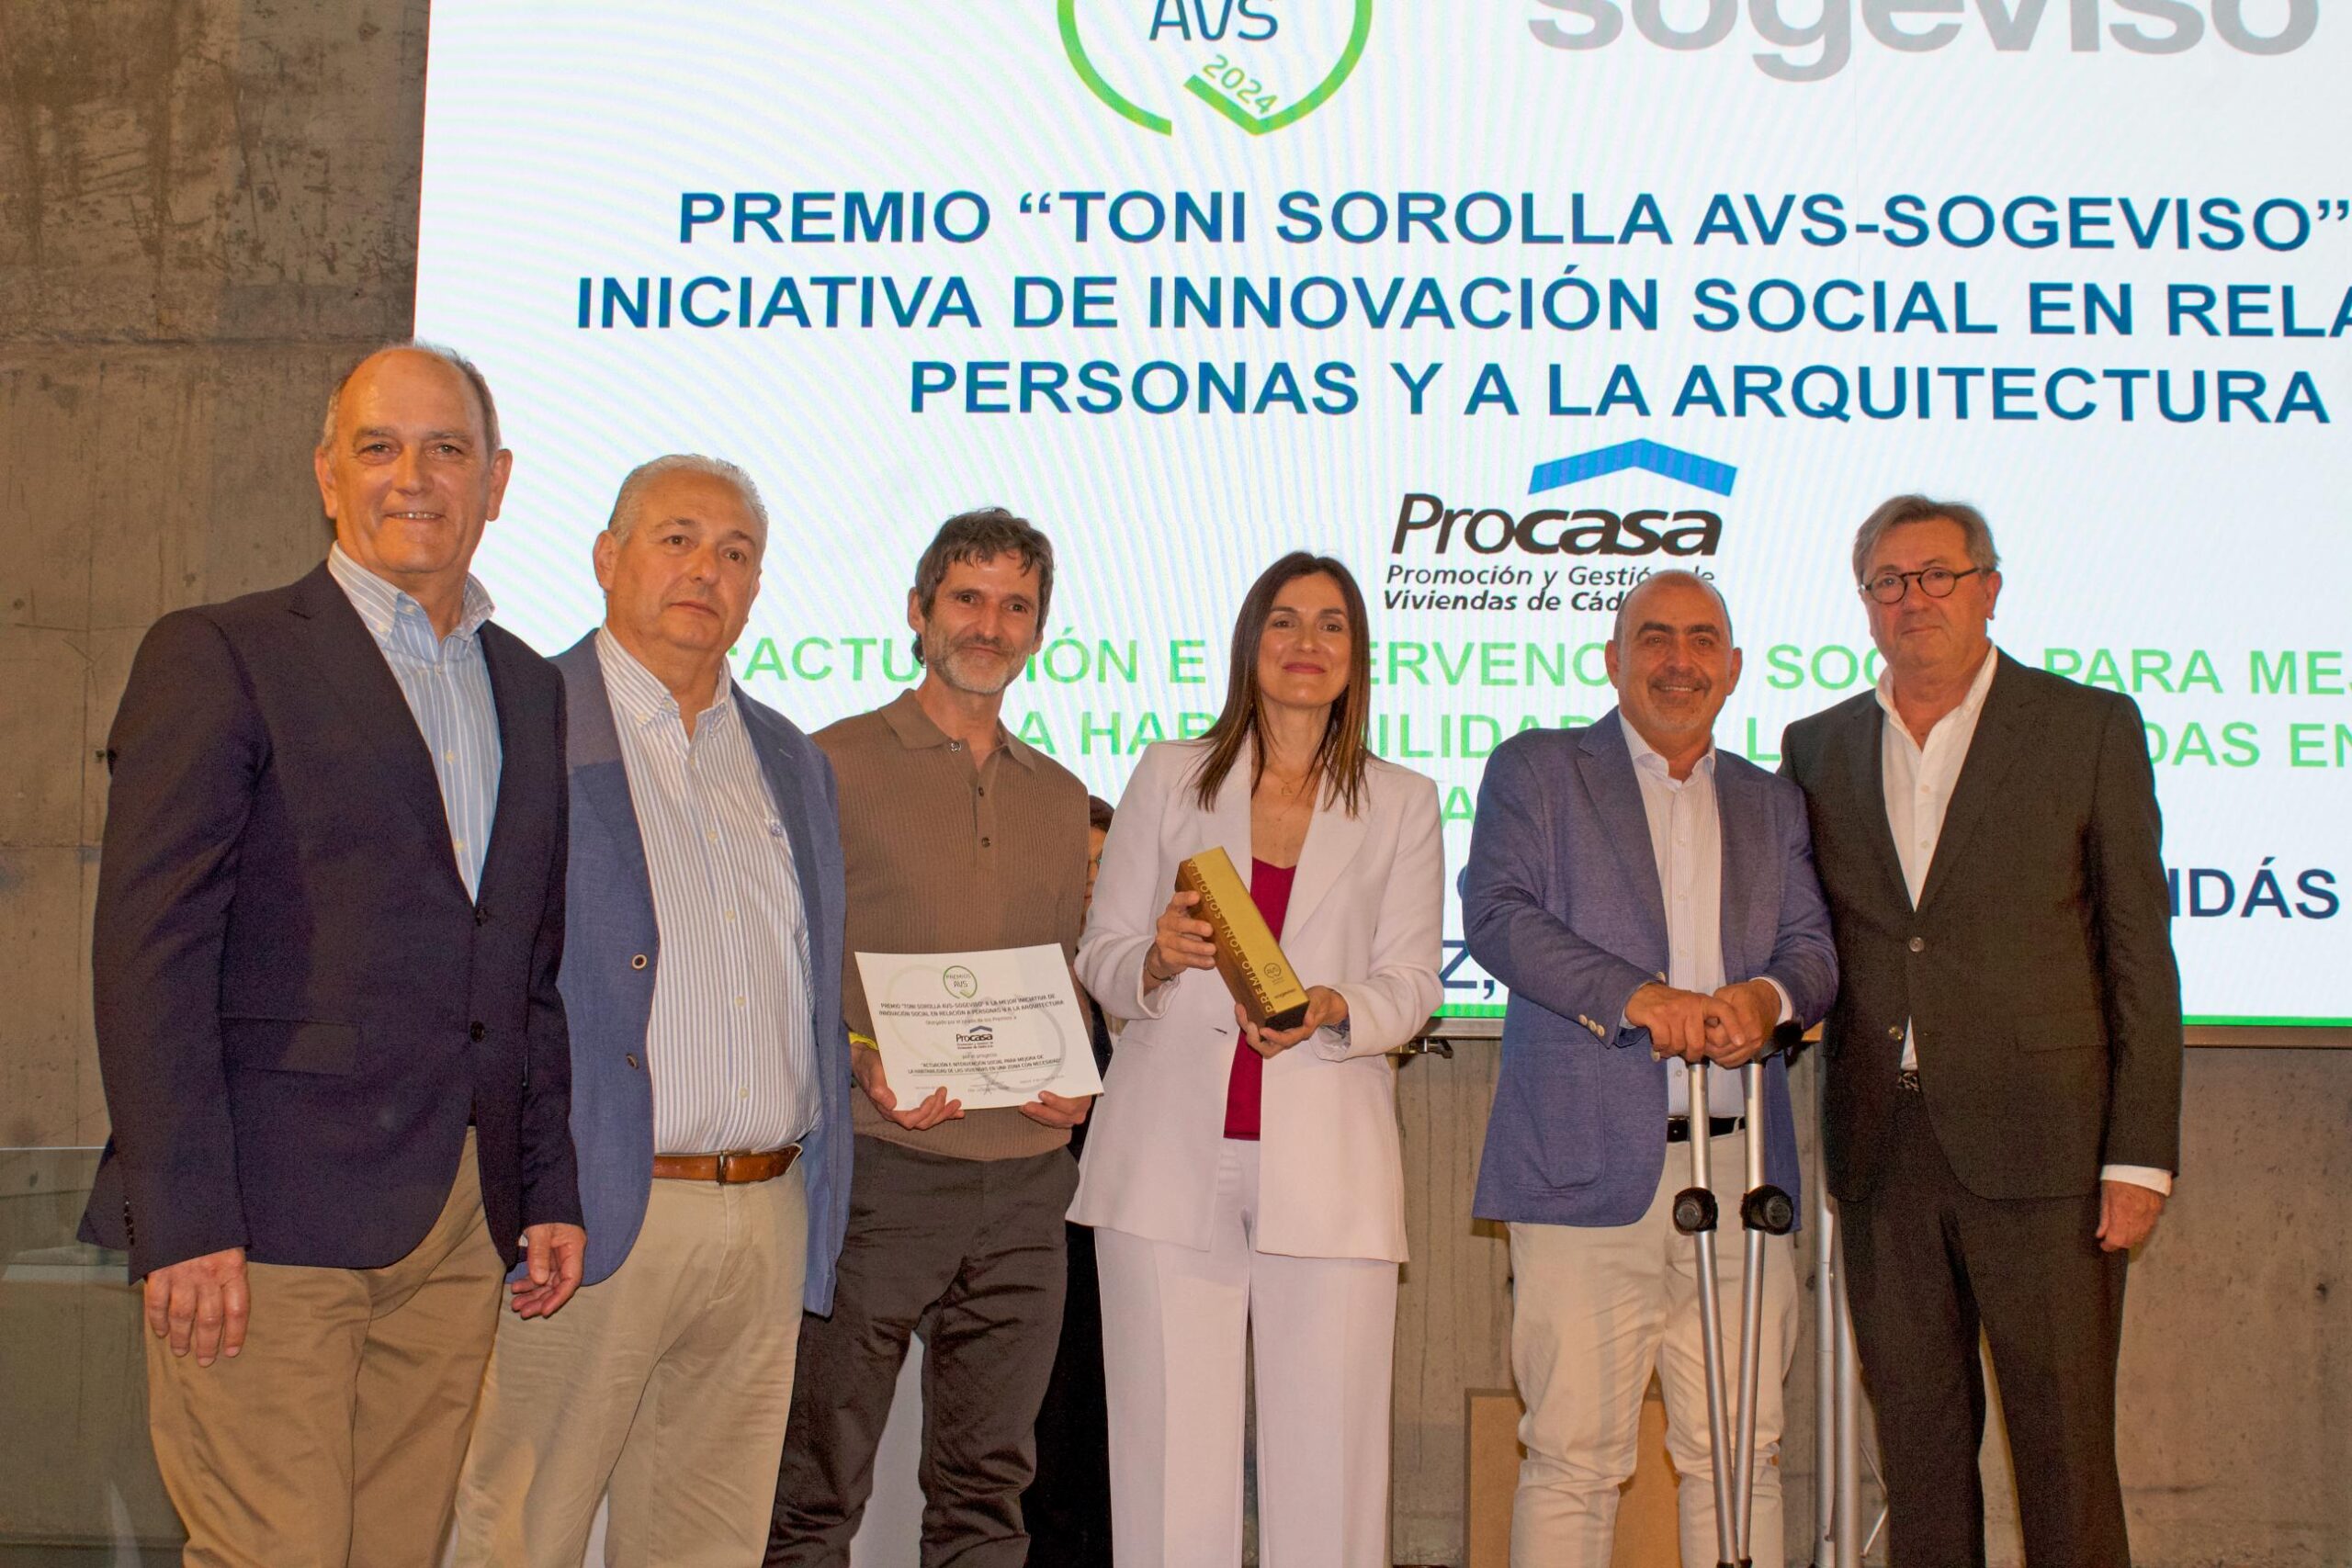 Presentation of the first Toni Sorolla Award, AVS-Sogeviso